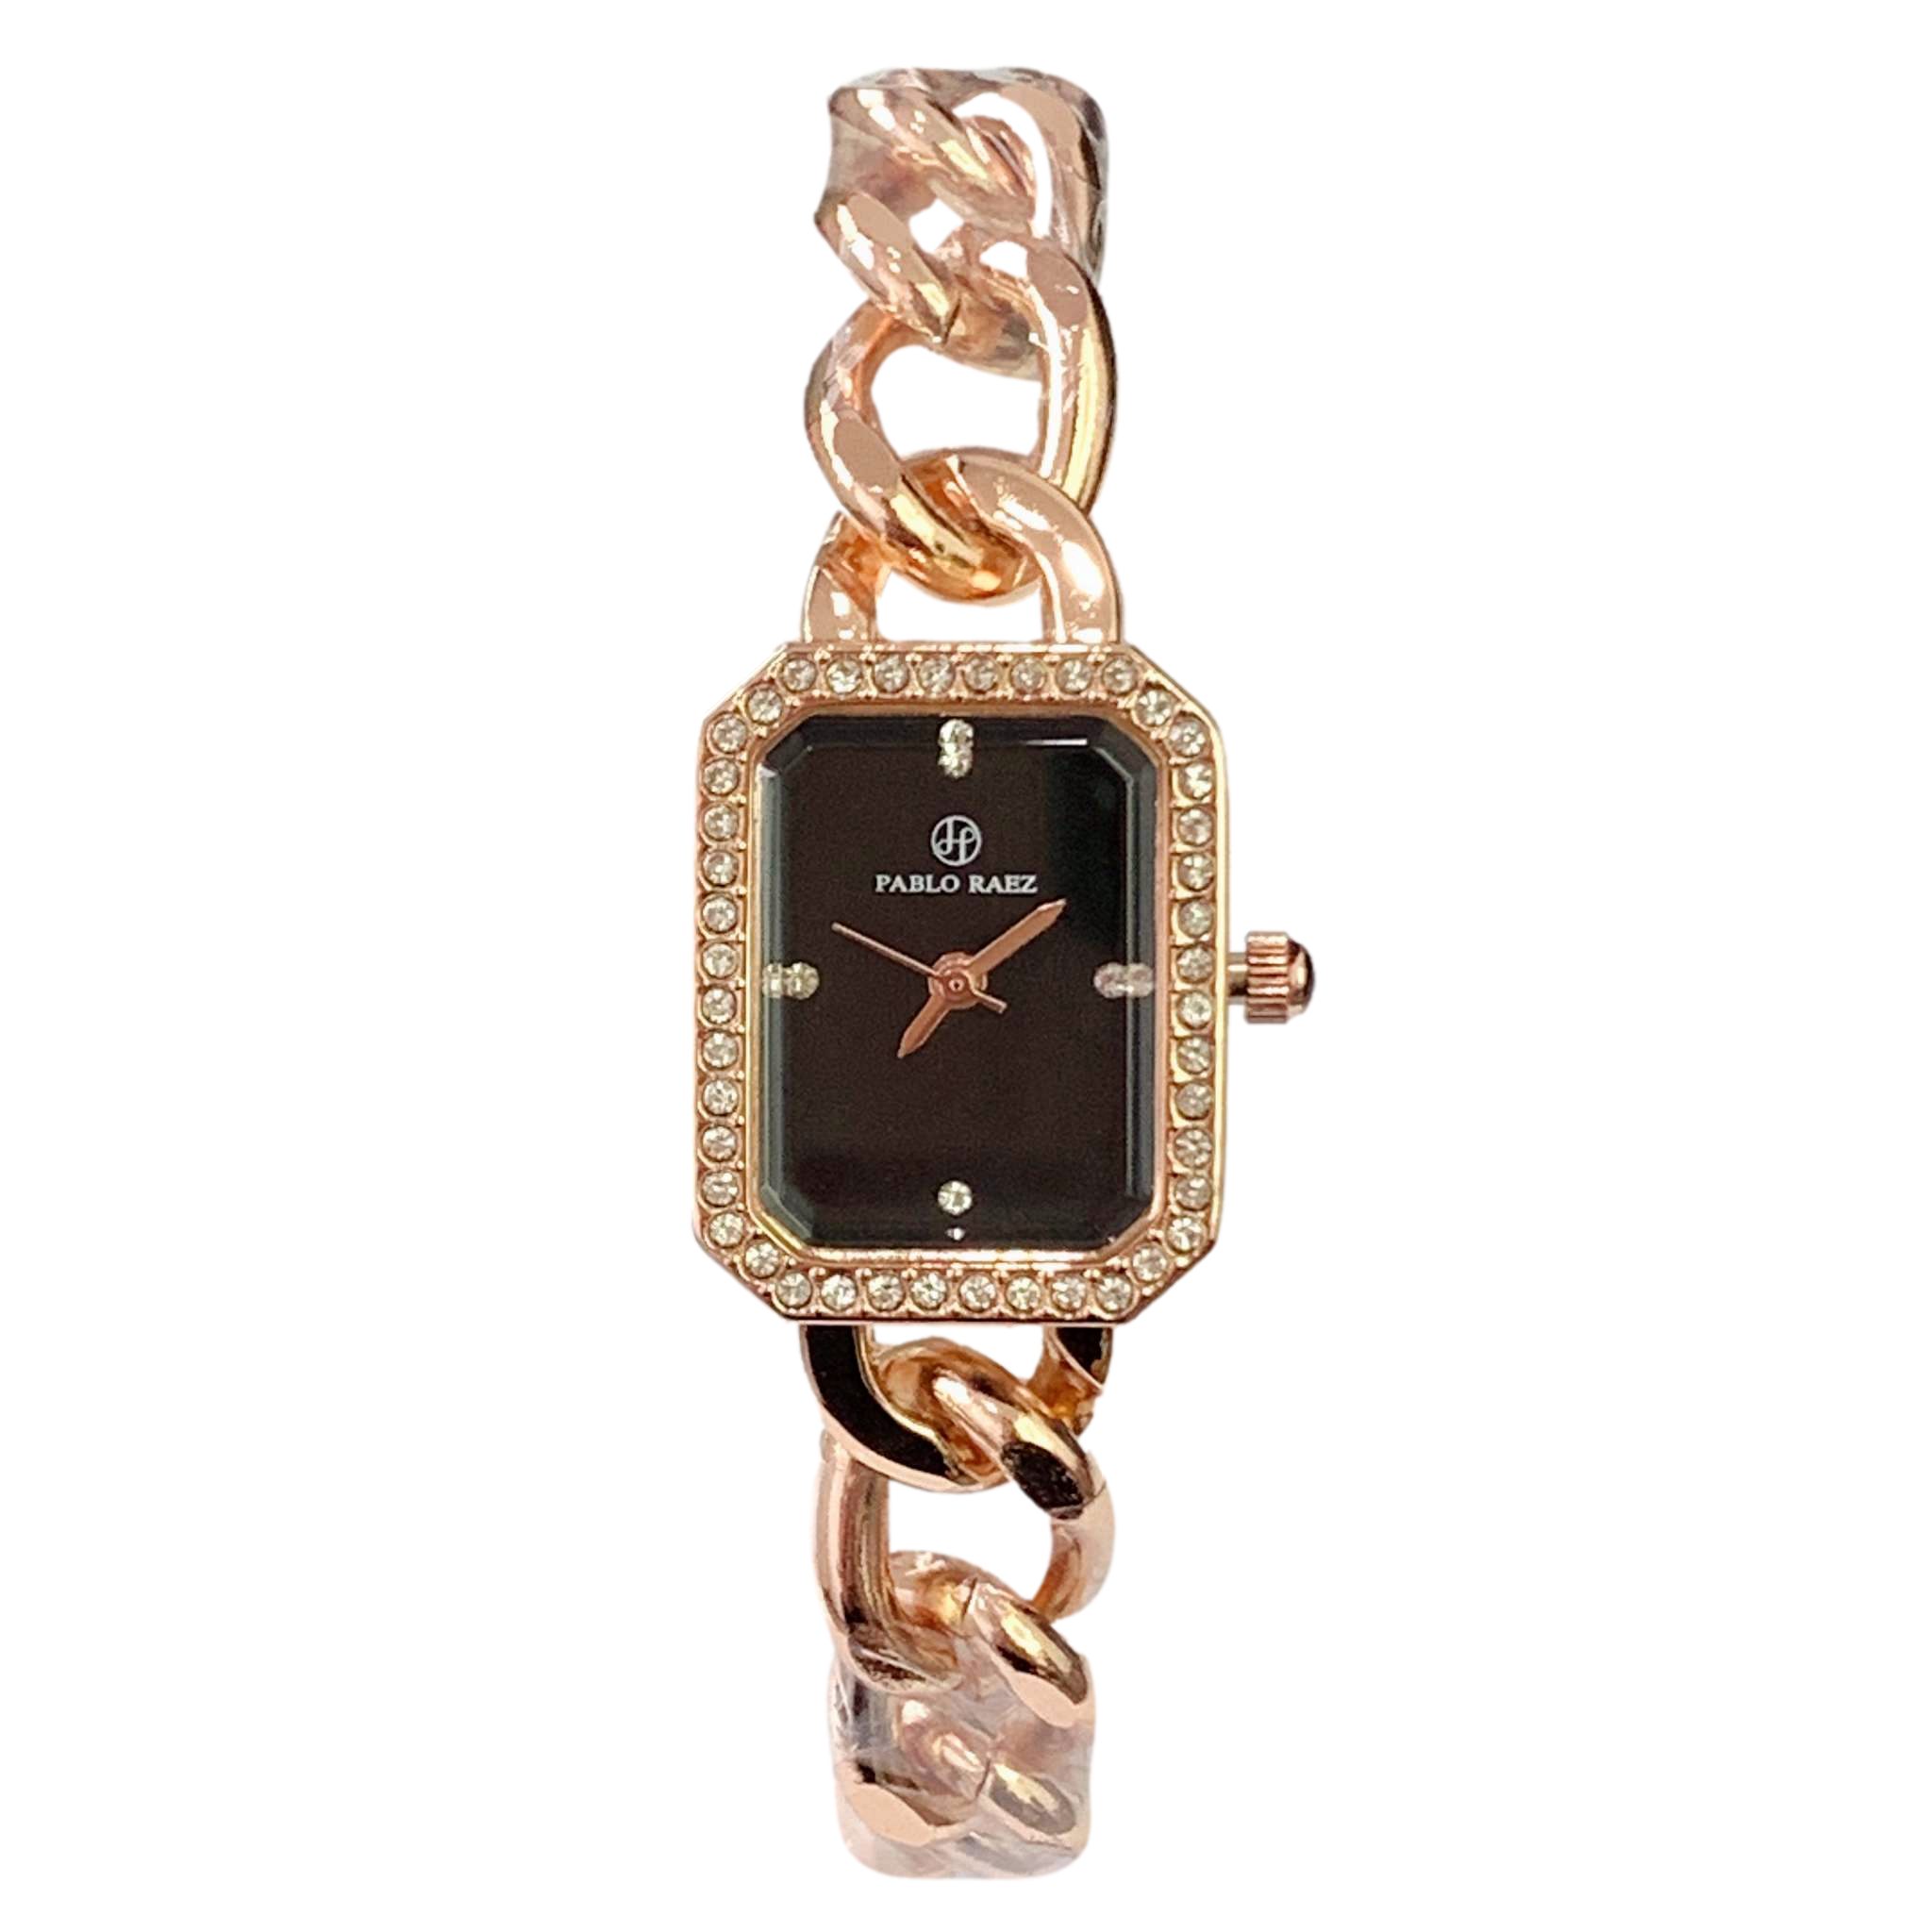 Pablo Raez Reloj Mujer Woman Diamond Watches Luxury Nurse Lady Casual Dress Female Fashion Wristwatch High Quality Gift For Girl